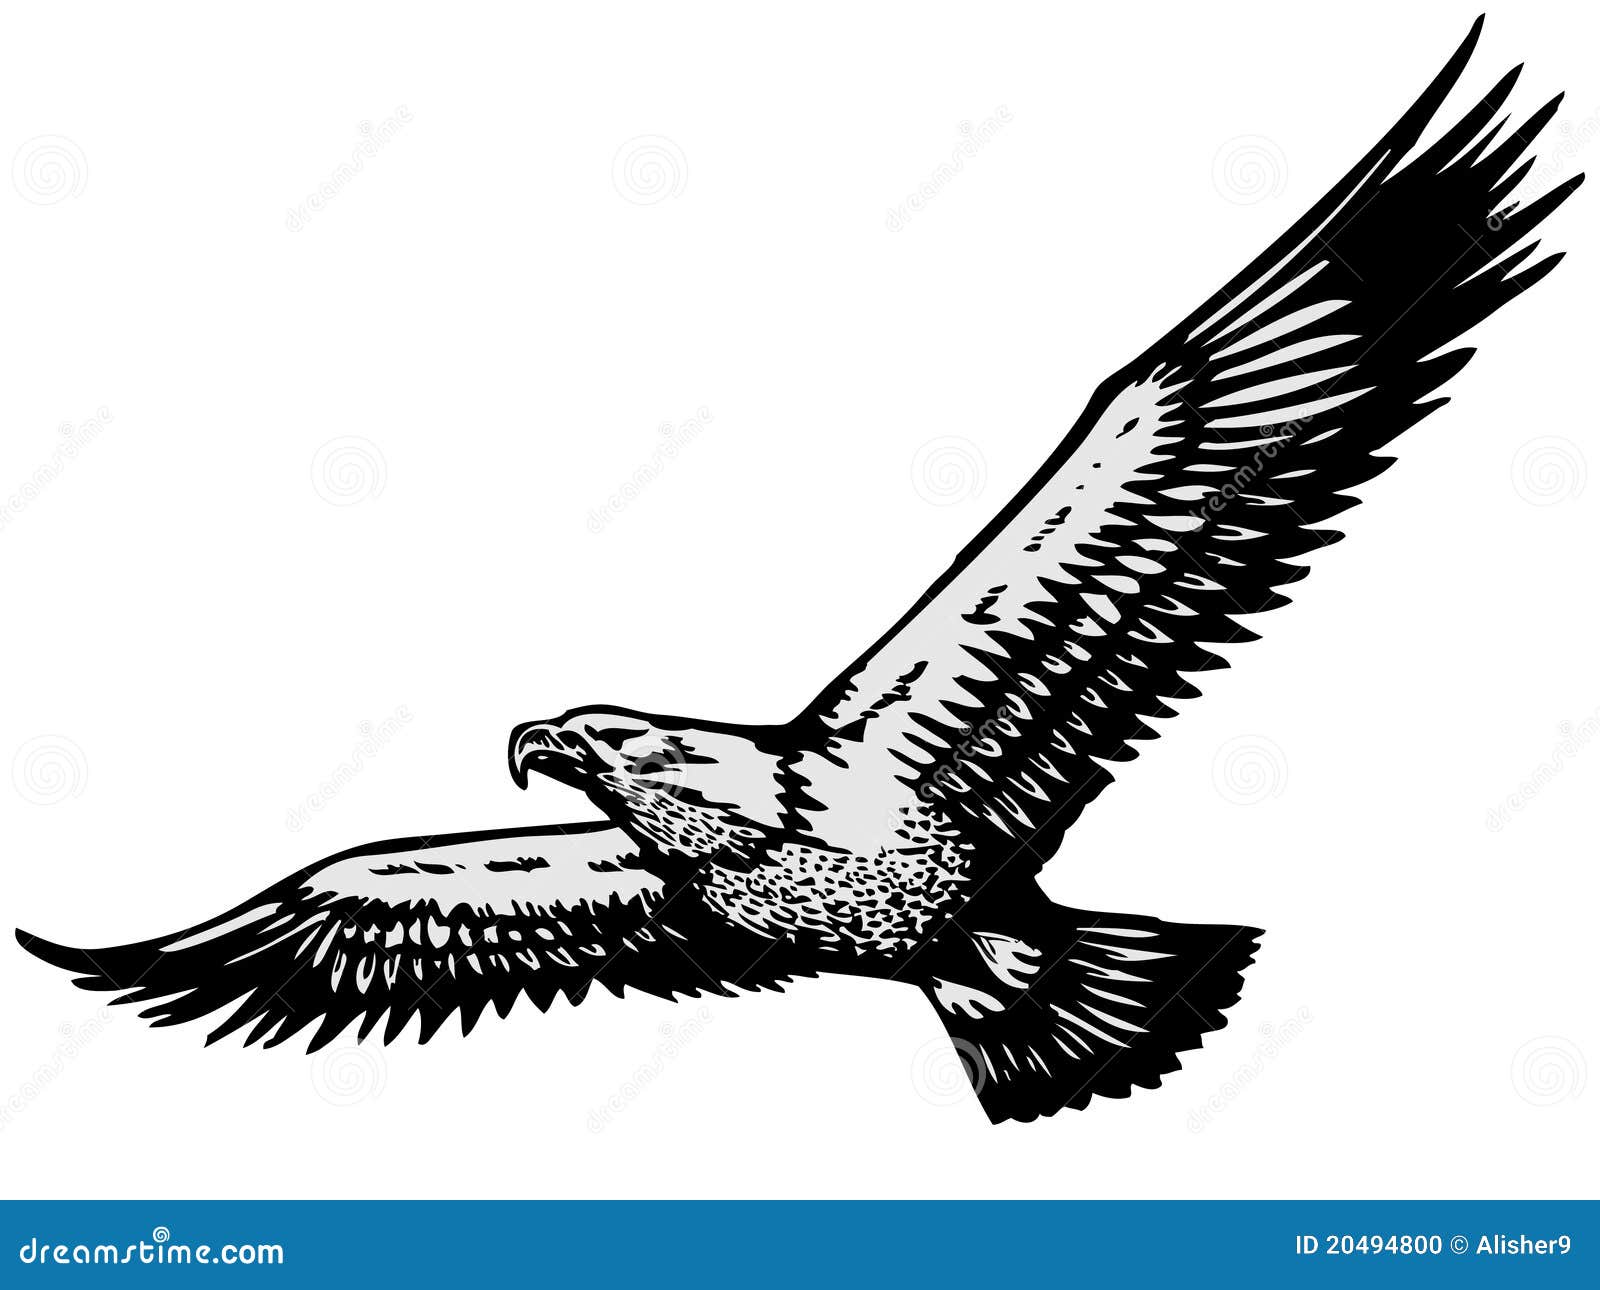 soaring eagle clipart black and white - photo #15